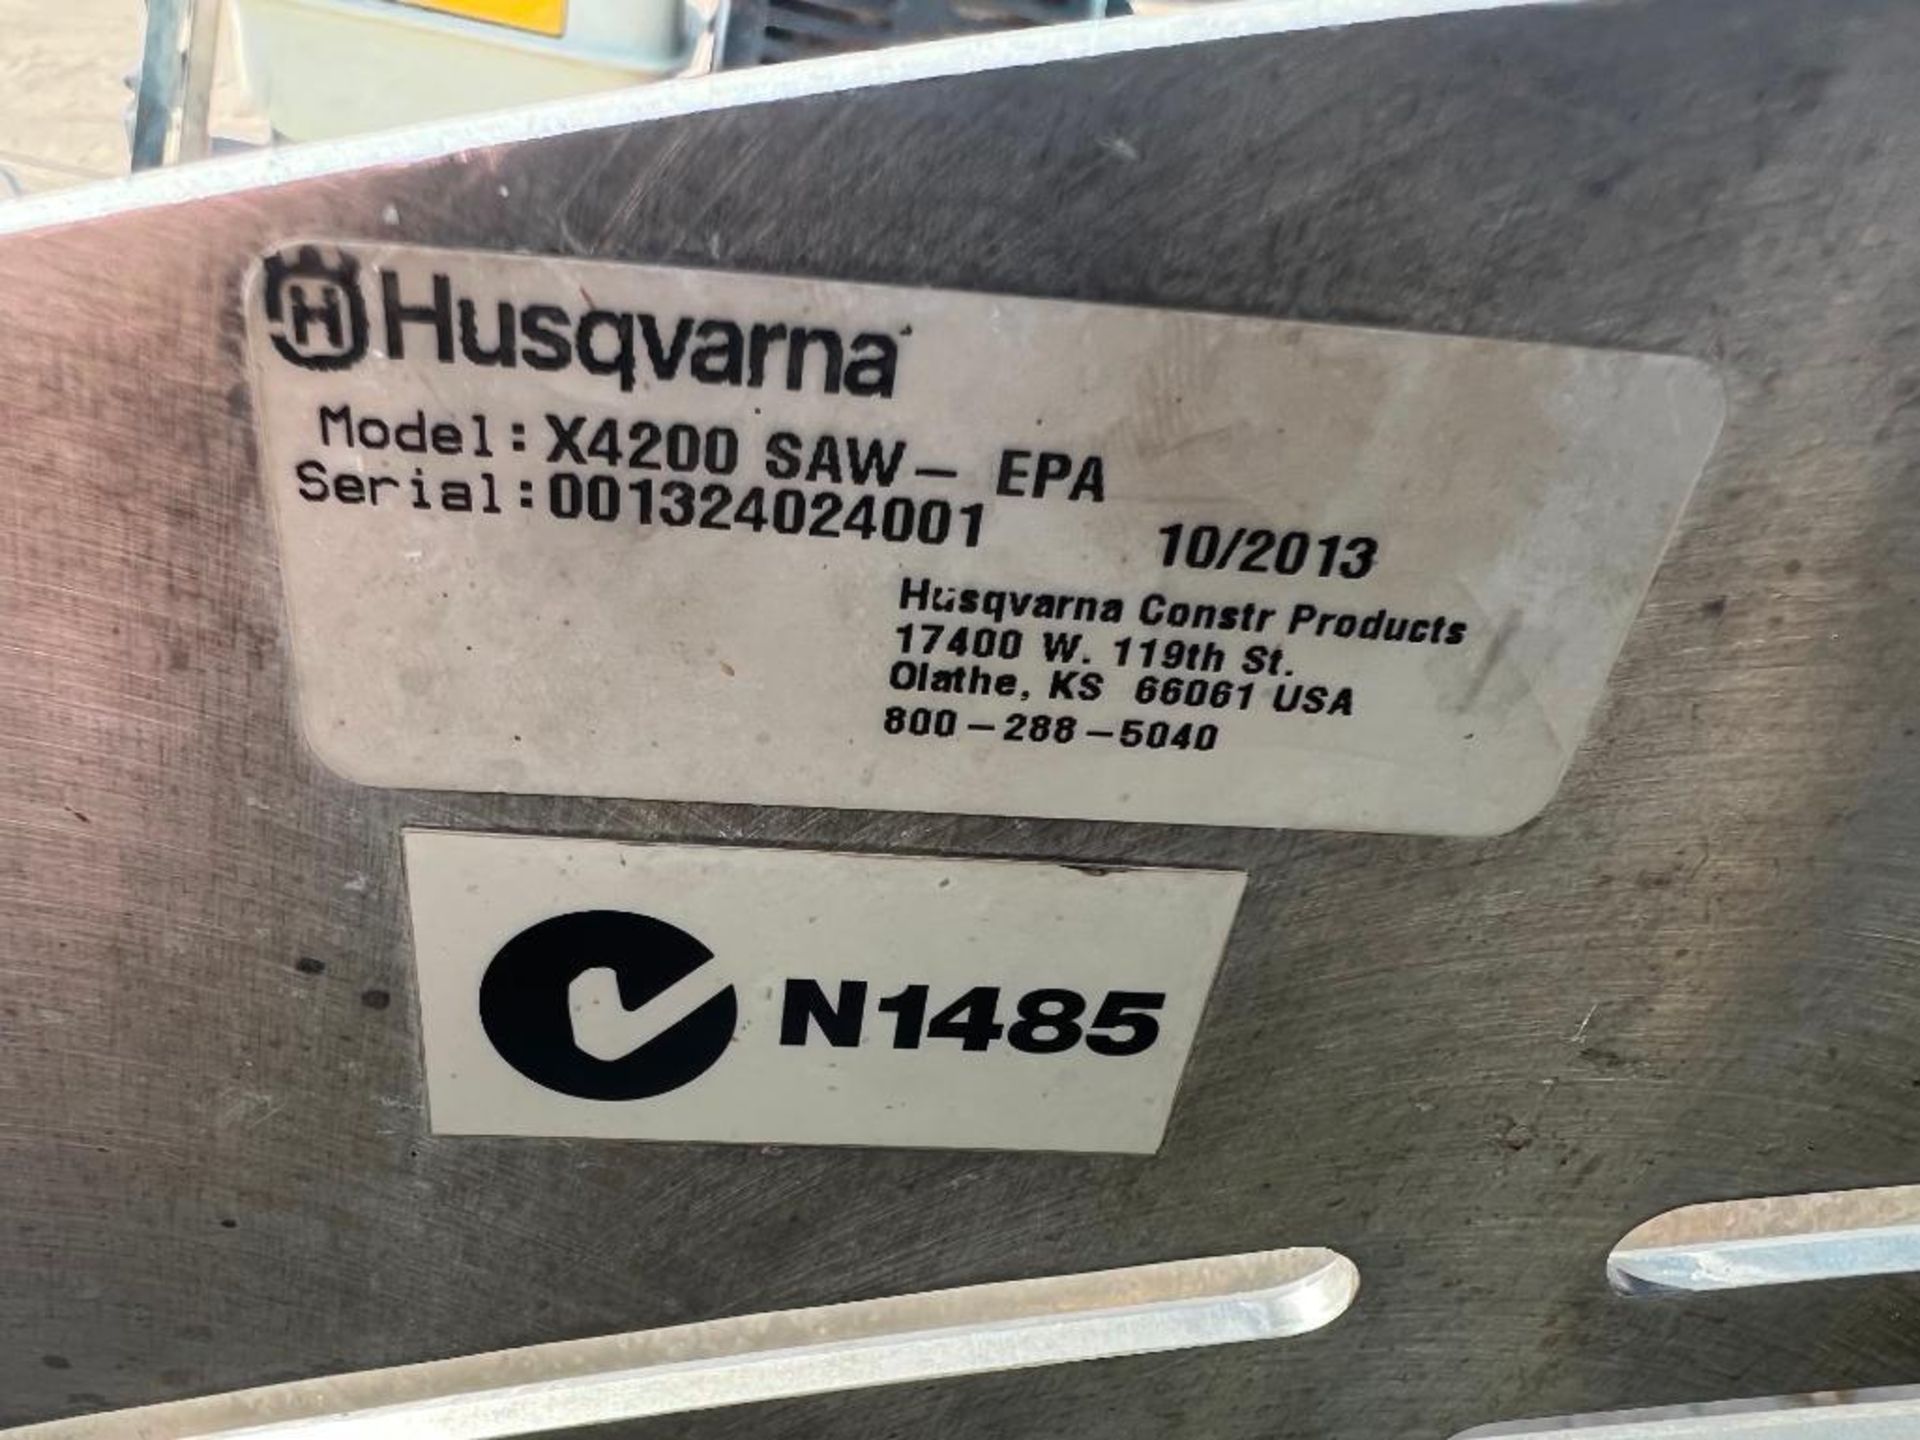 2013 Husqvarna X4200 Soff-Cut Concrete Saw, Hours 593, Serial #001324024001, 23 hp Engine, Cutting D - Image 5 of 9